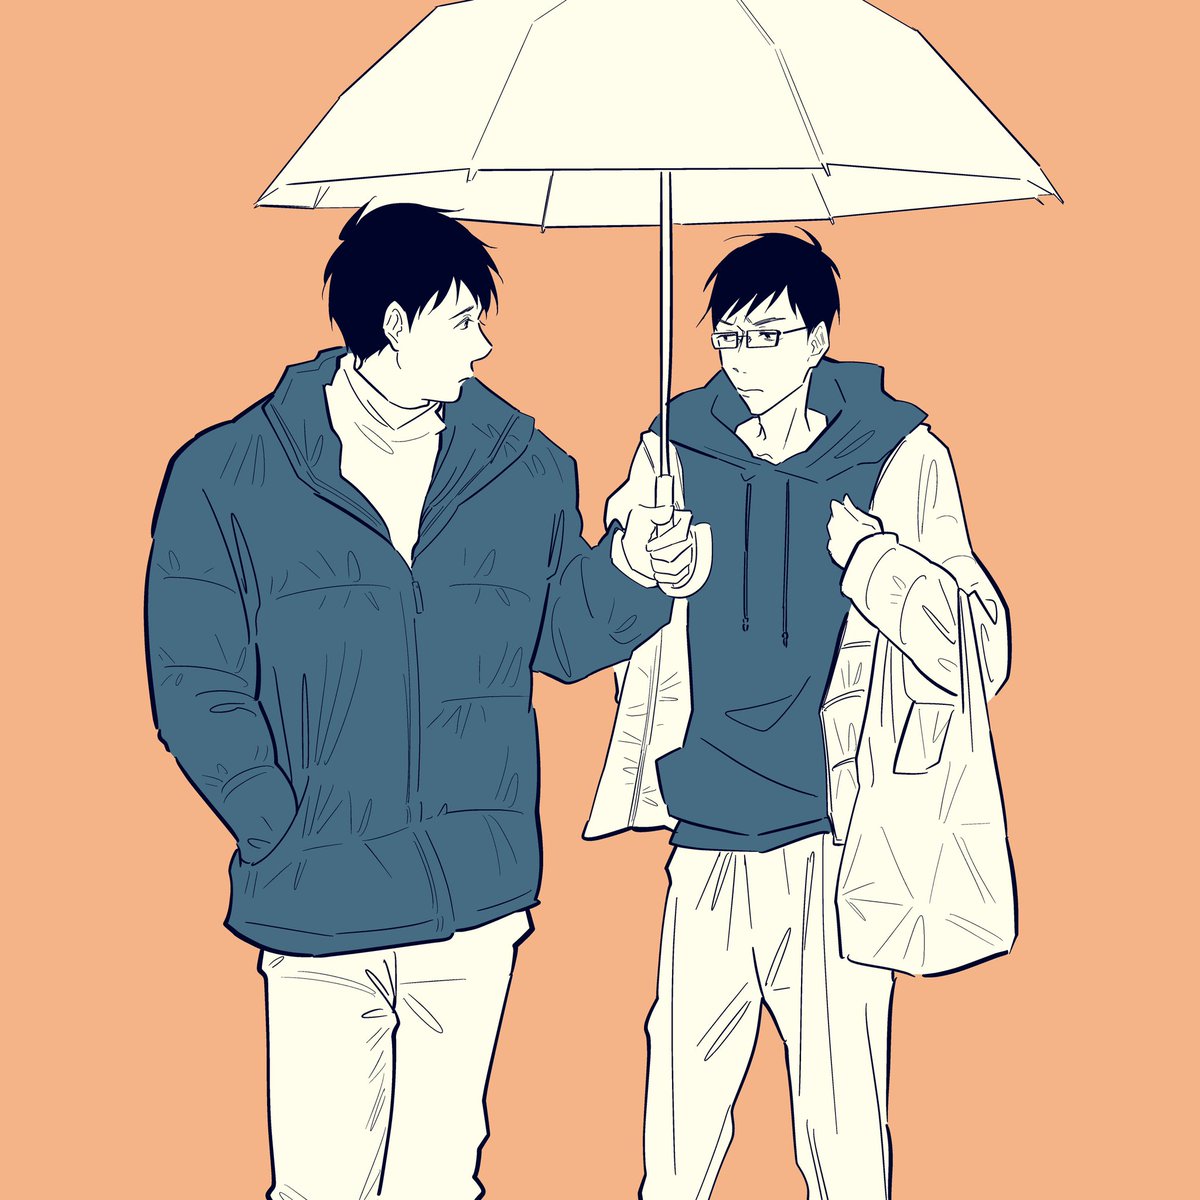 2boys multiple boys umbrella holding umbrella male focus holding shared umbrella  illustration images